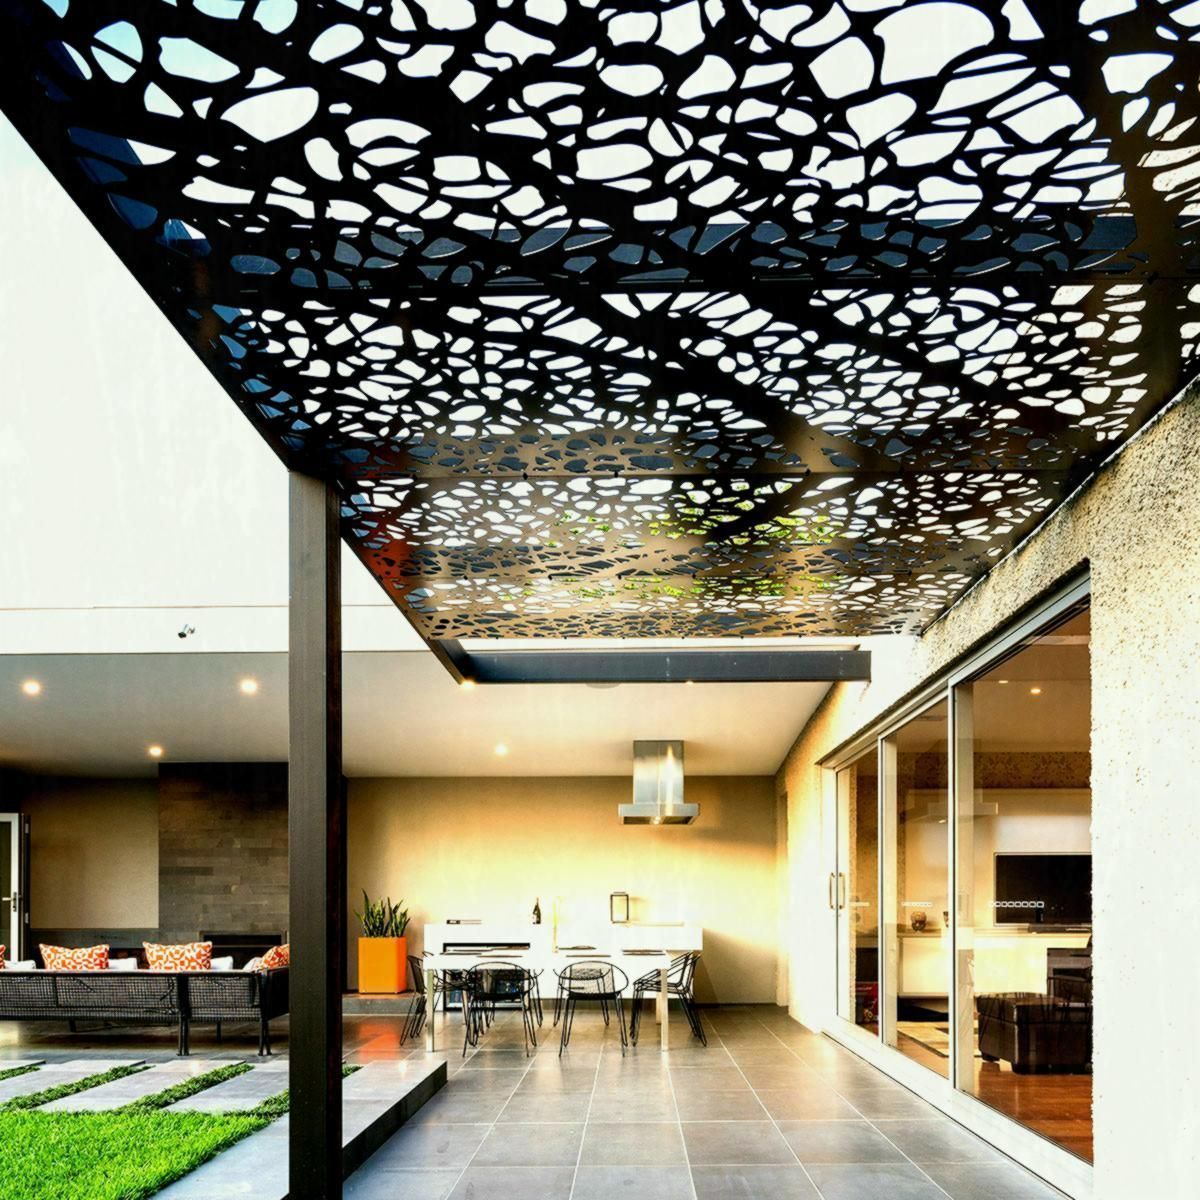 Modernetal Pergola Steel Designs Uk Kits Decorative Garden Features ...